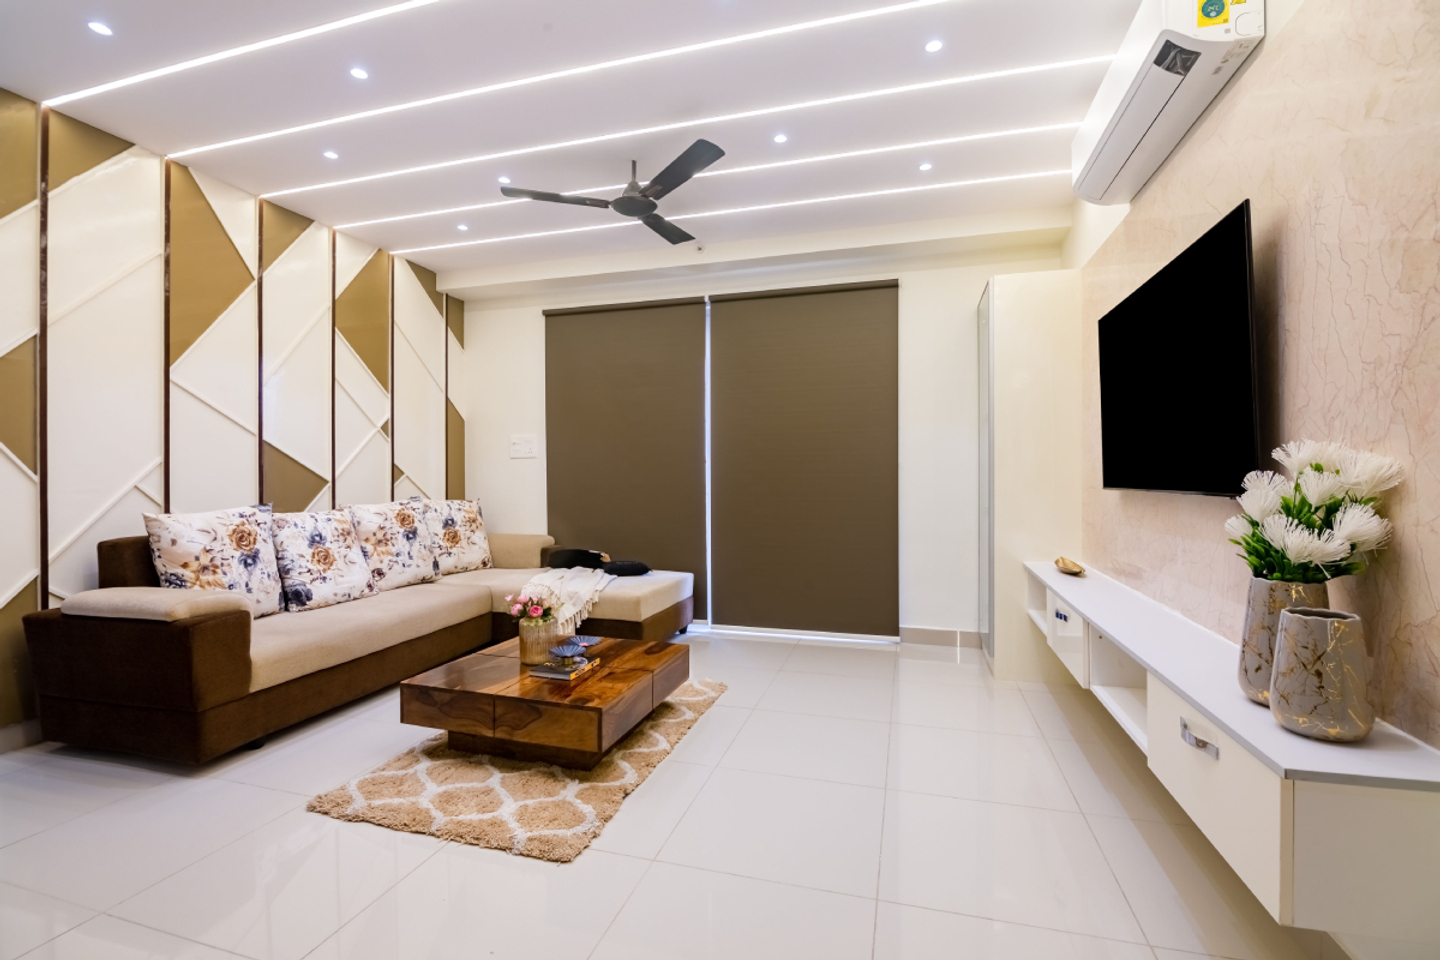 Living Room Decor With A Contemporary False Ceiling Design With Profiled Lights